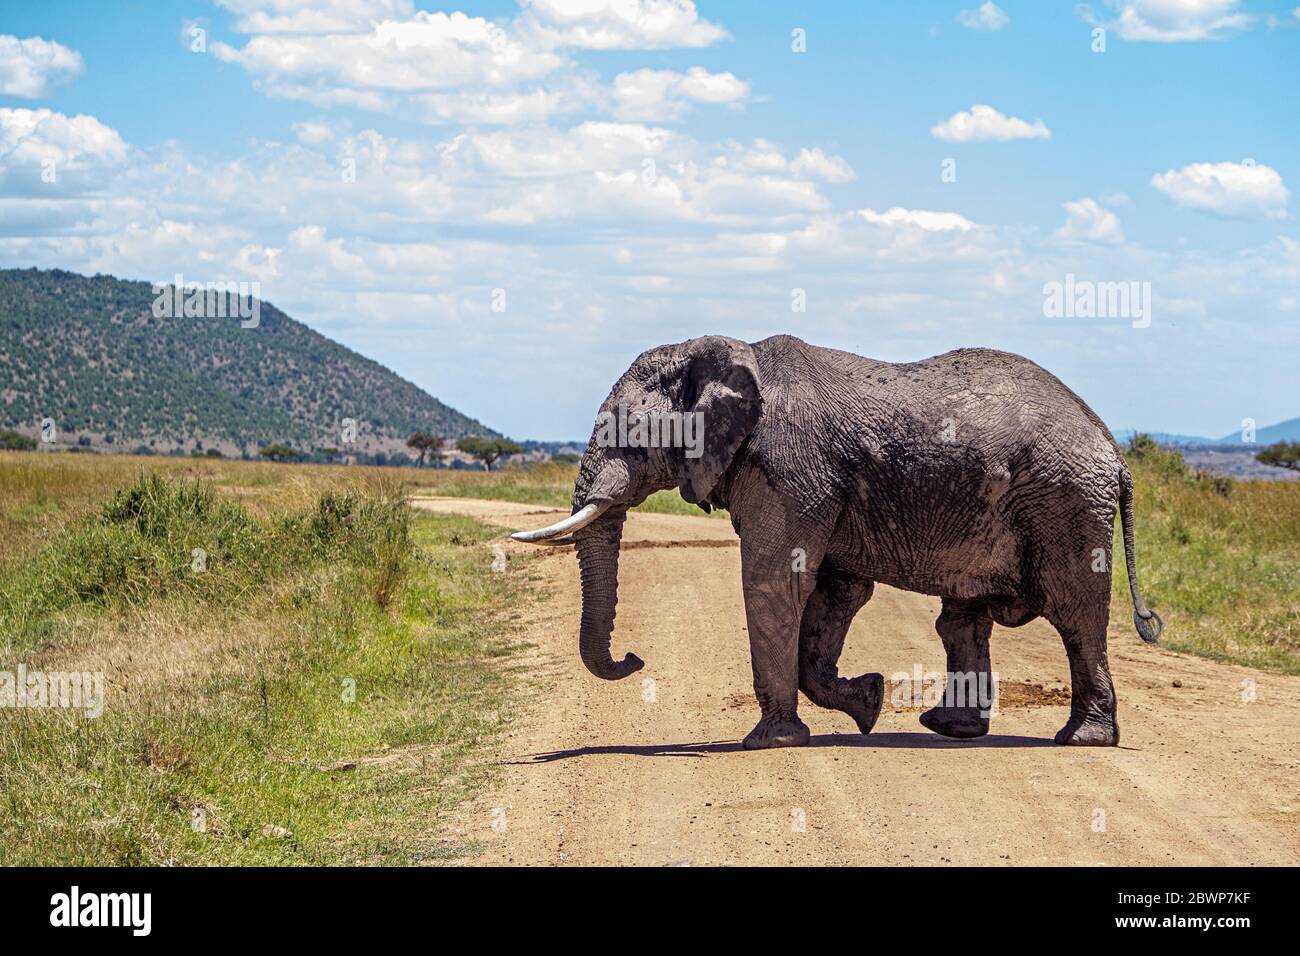 Große afrikanische Elefantenkreuzung Straße für Safari-Fahrzeuge in Masai Mara Bereich von Kenia, Afrika Stockfoto